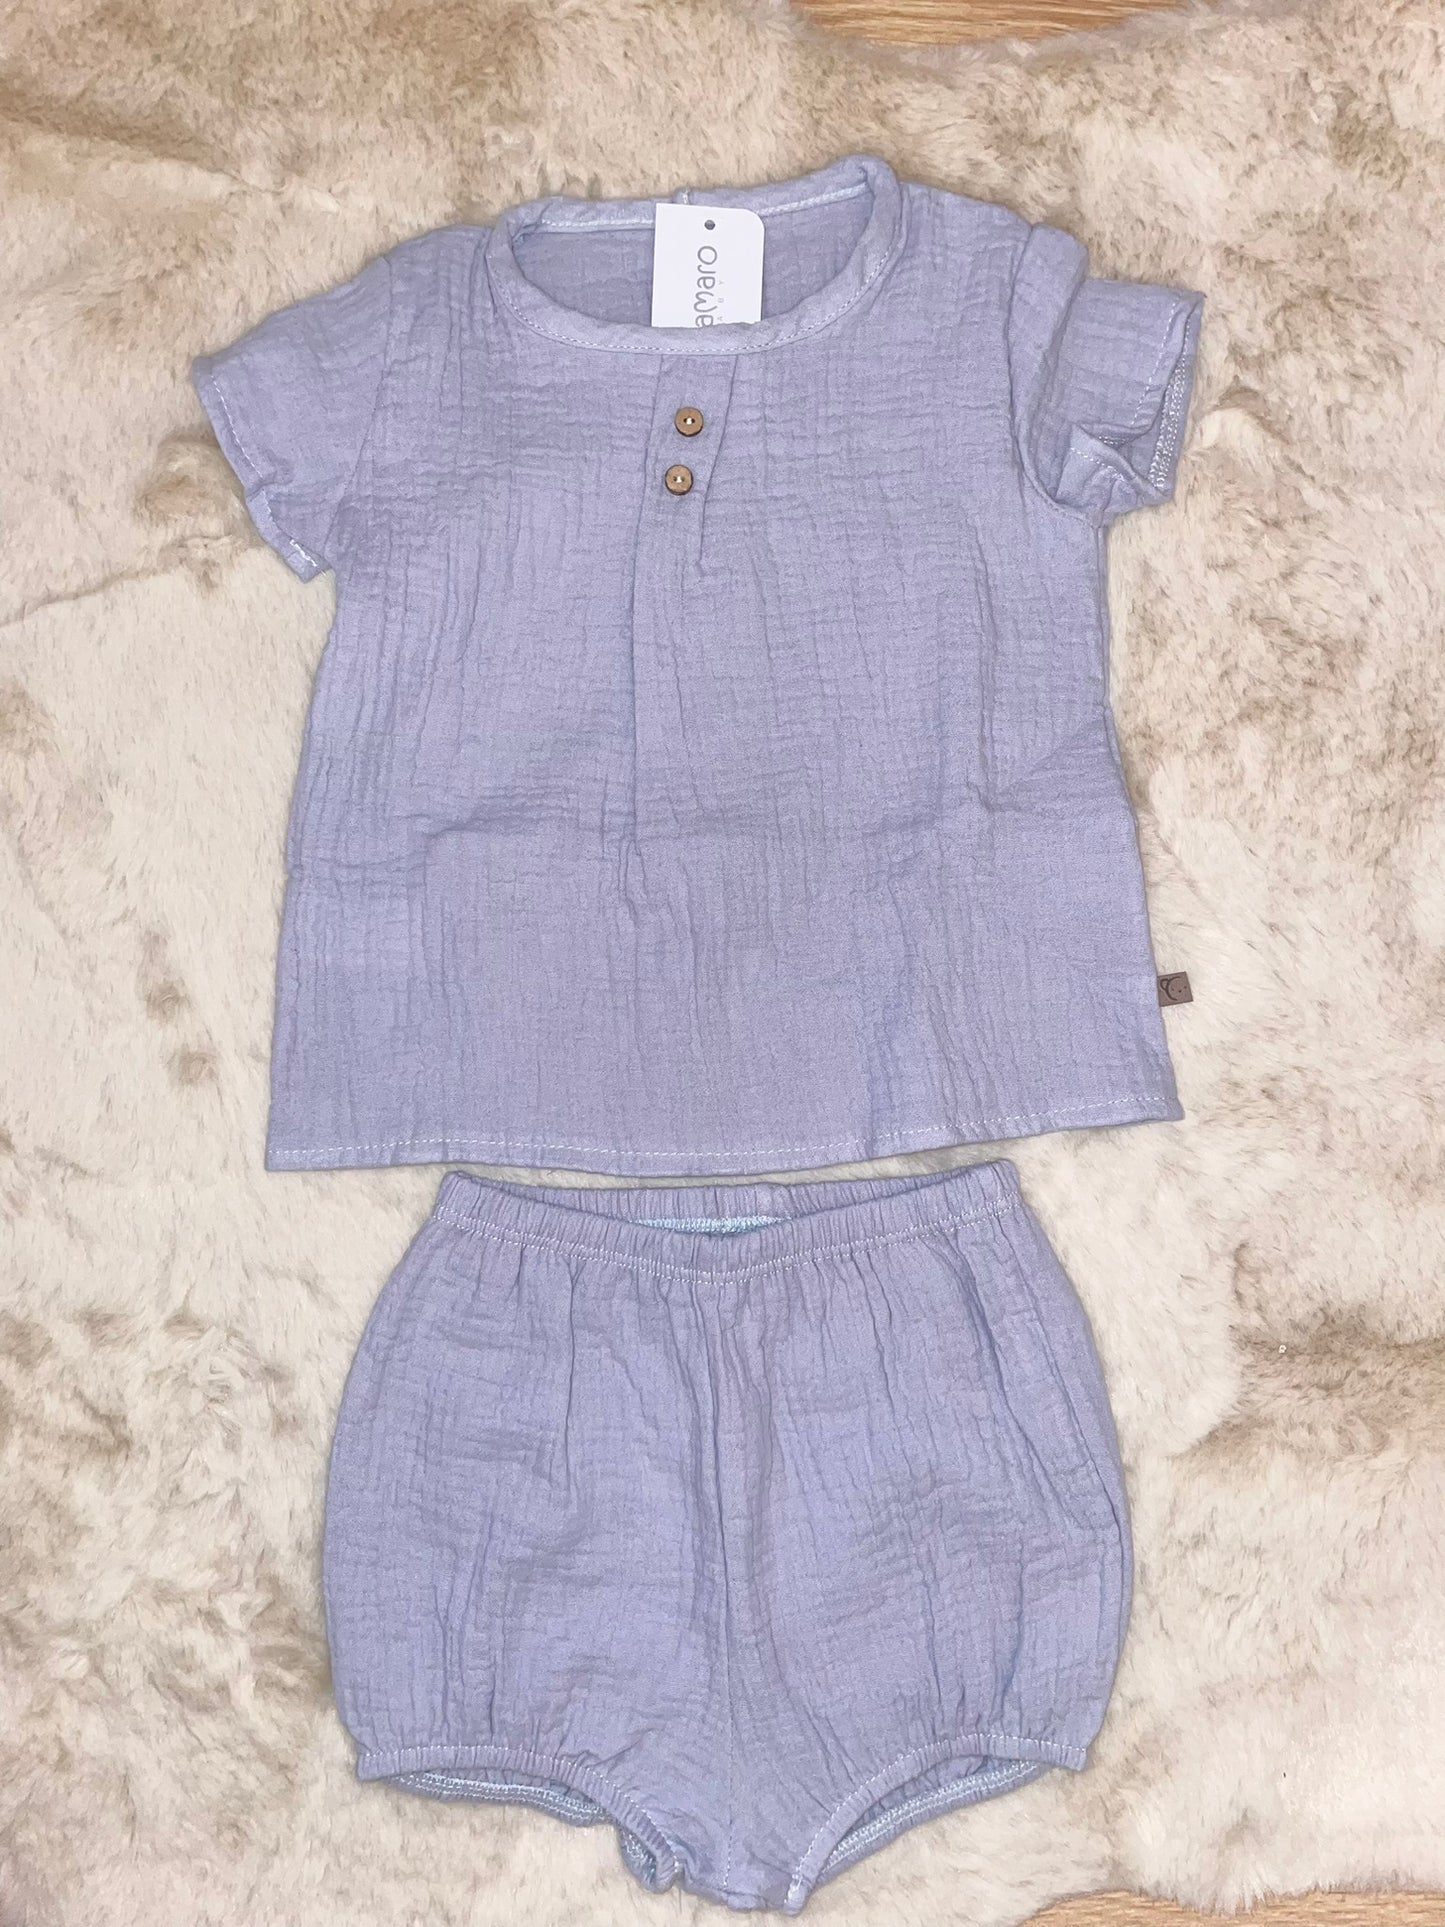 Calamaro Baby Boys Blue Light Cotton Short Sleeved Top & Short Set